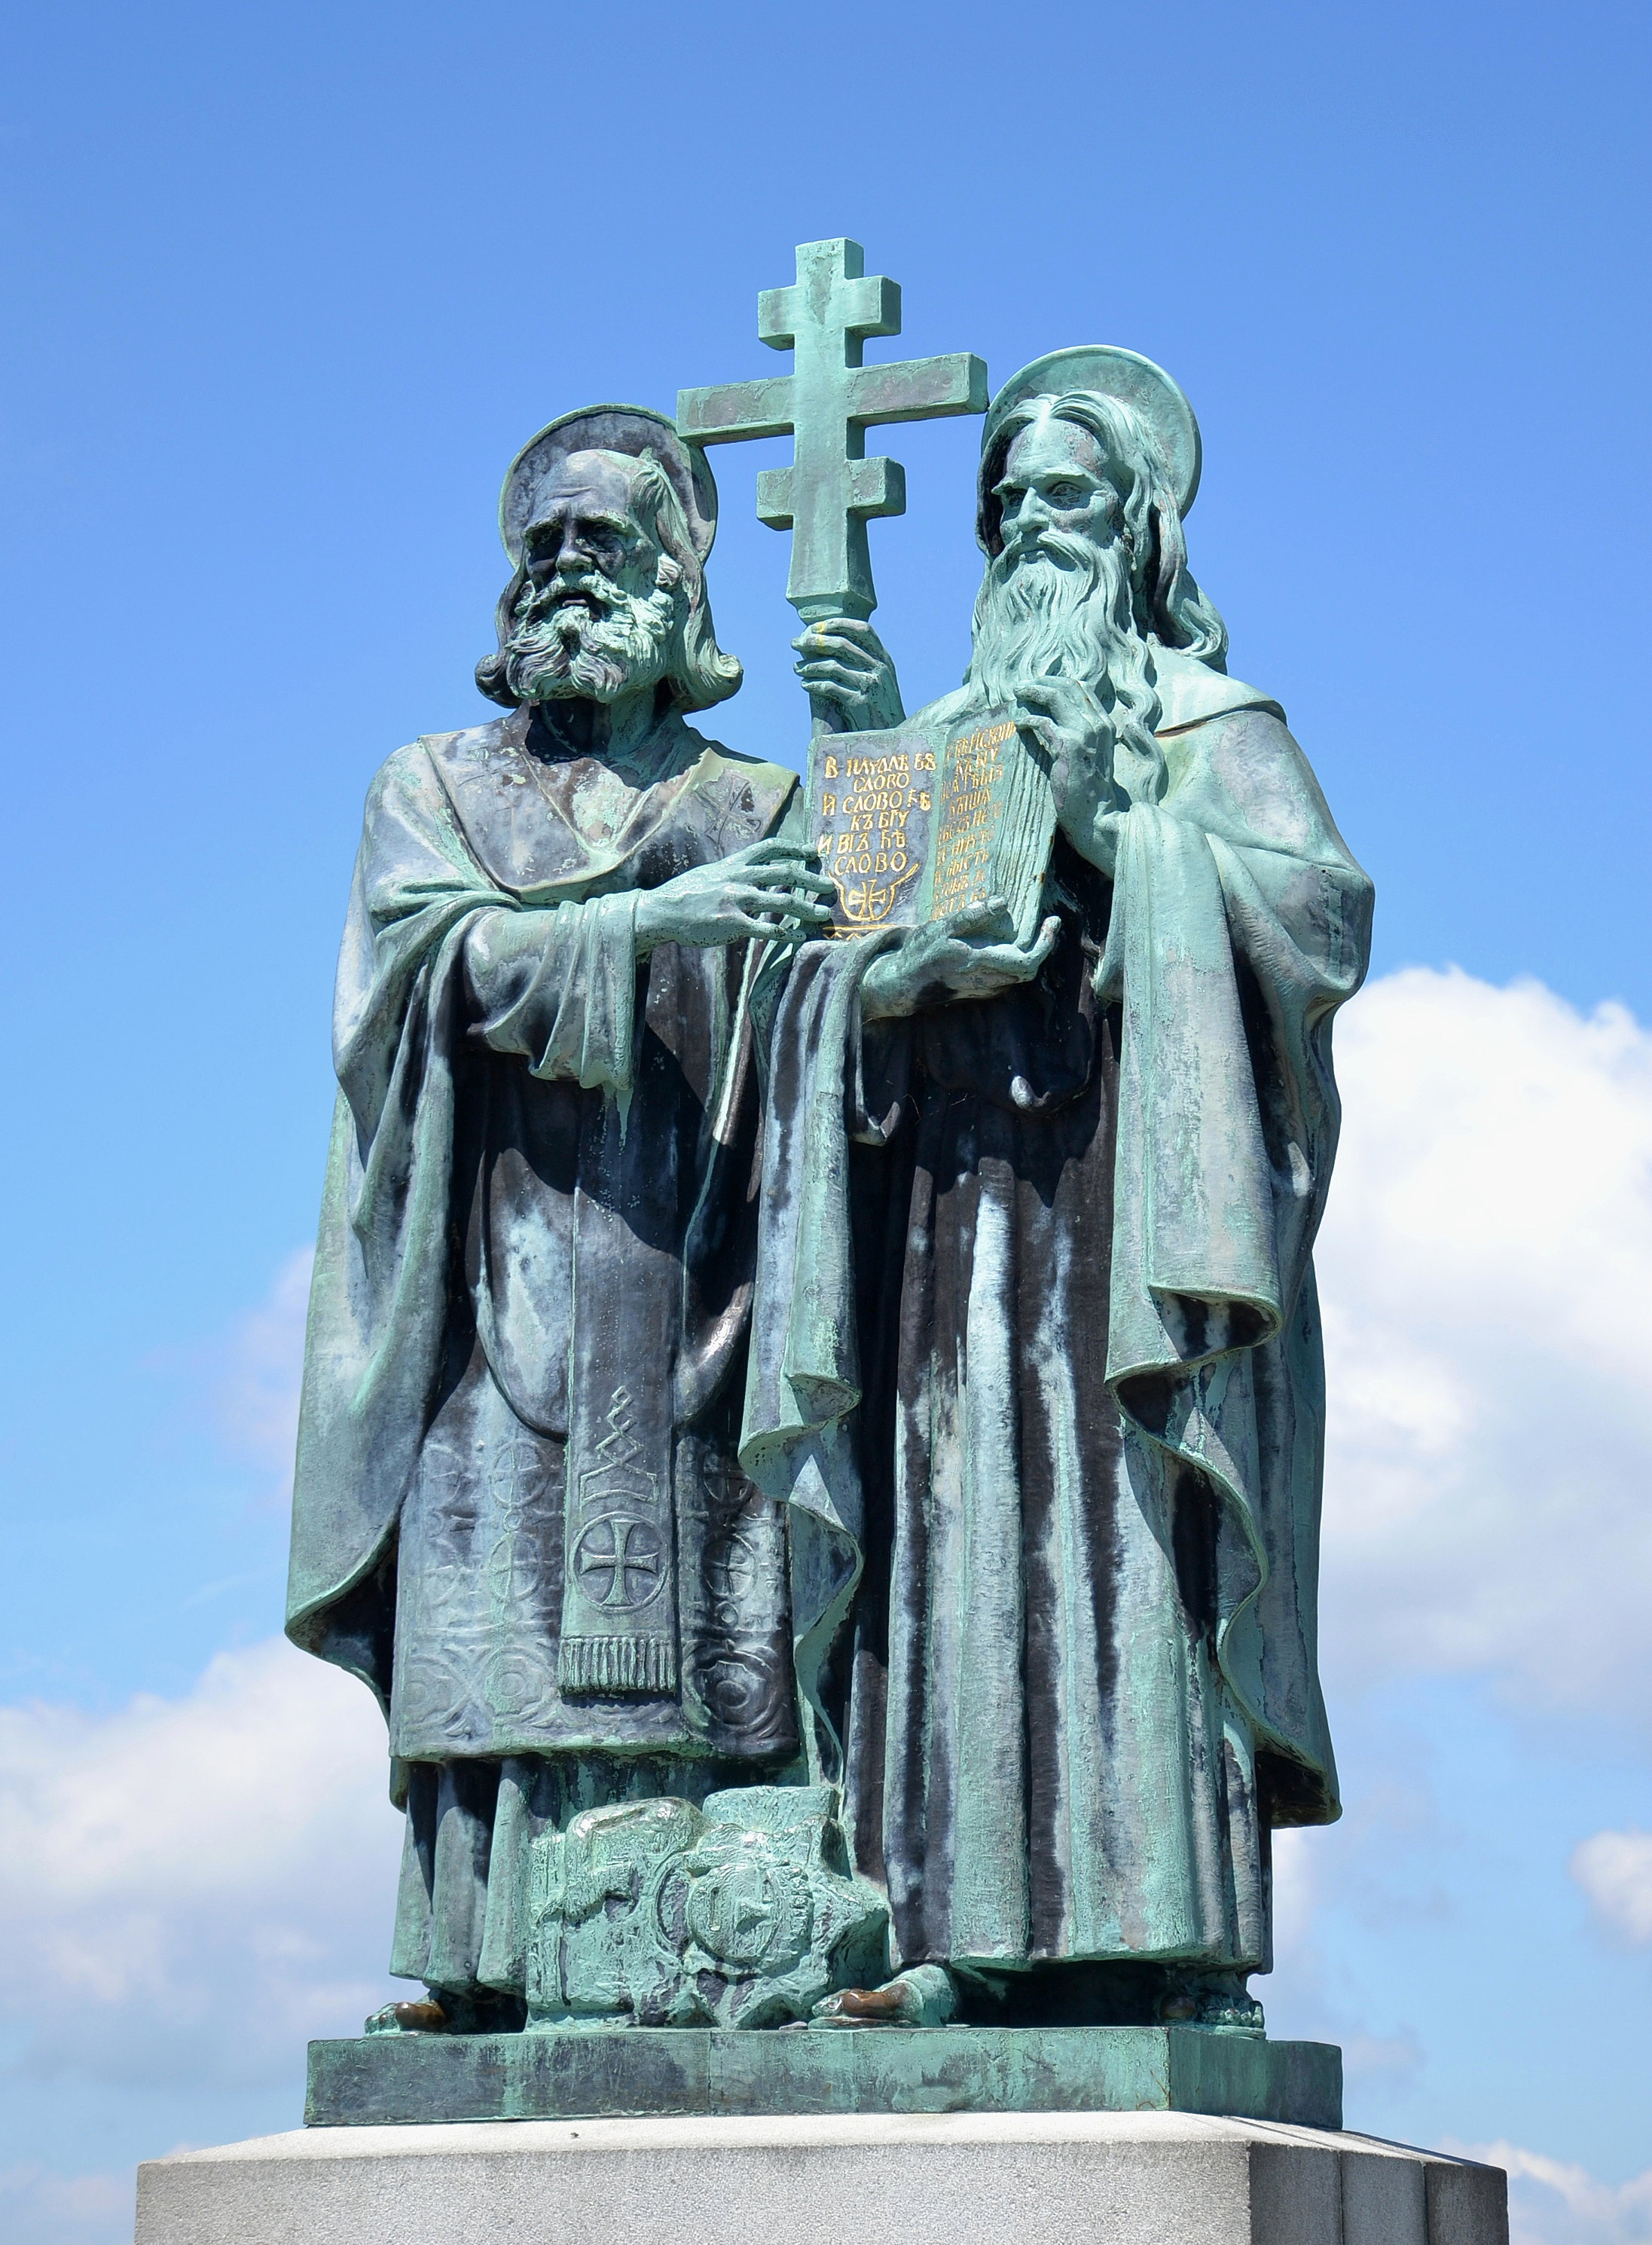 Statue of Saints Cyril and Methodius on Radhošť